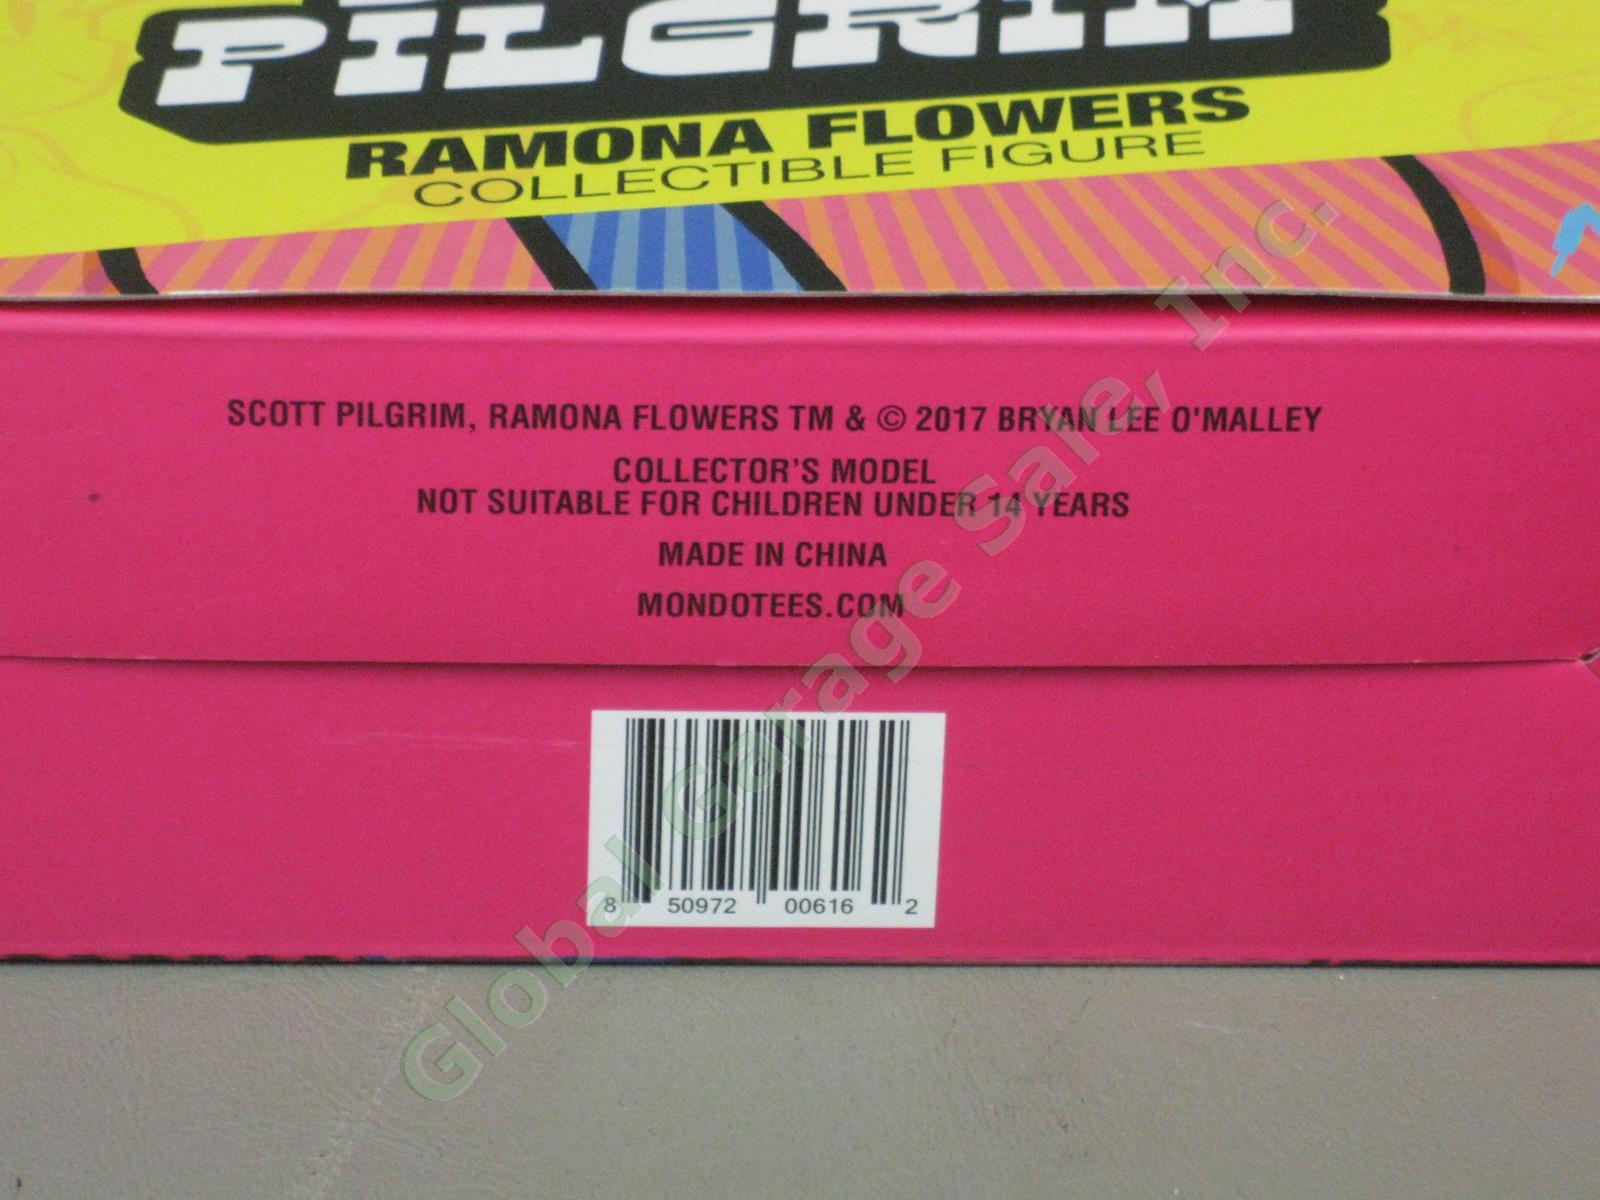 RARE New In Box NRFB Mondo Exclusive Ramona Flowers Figure w/Scott Pilgrim 11